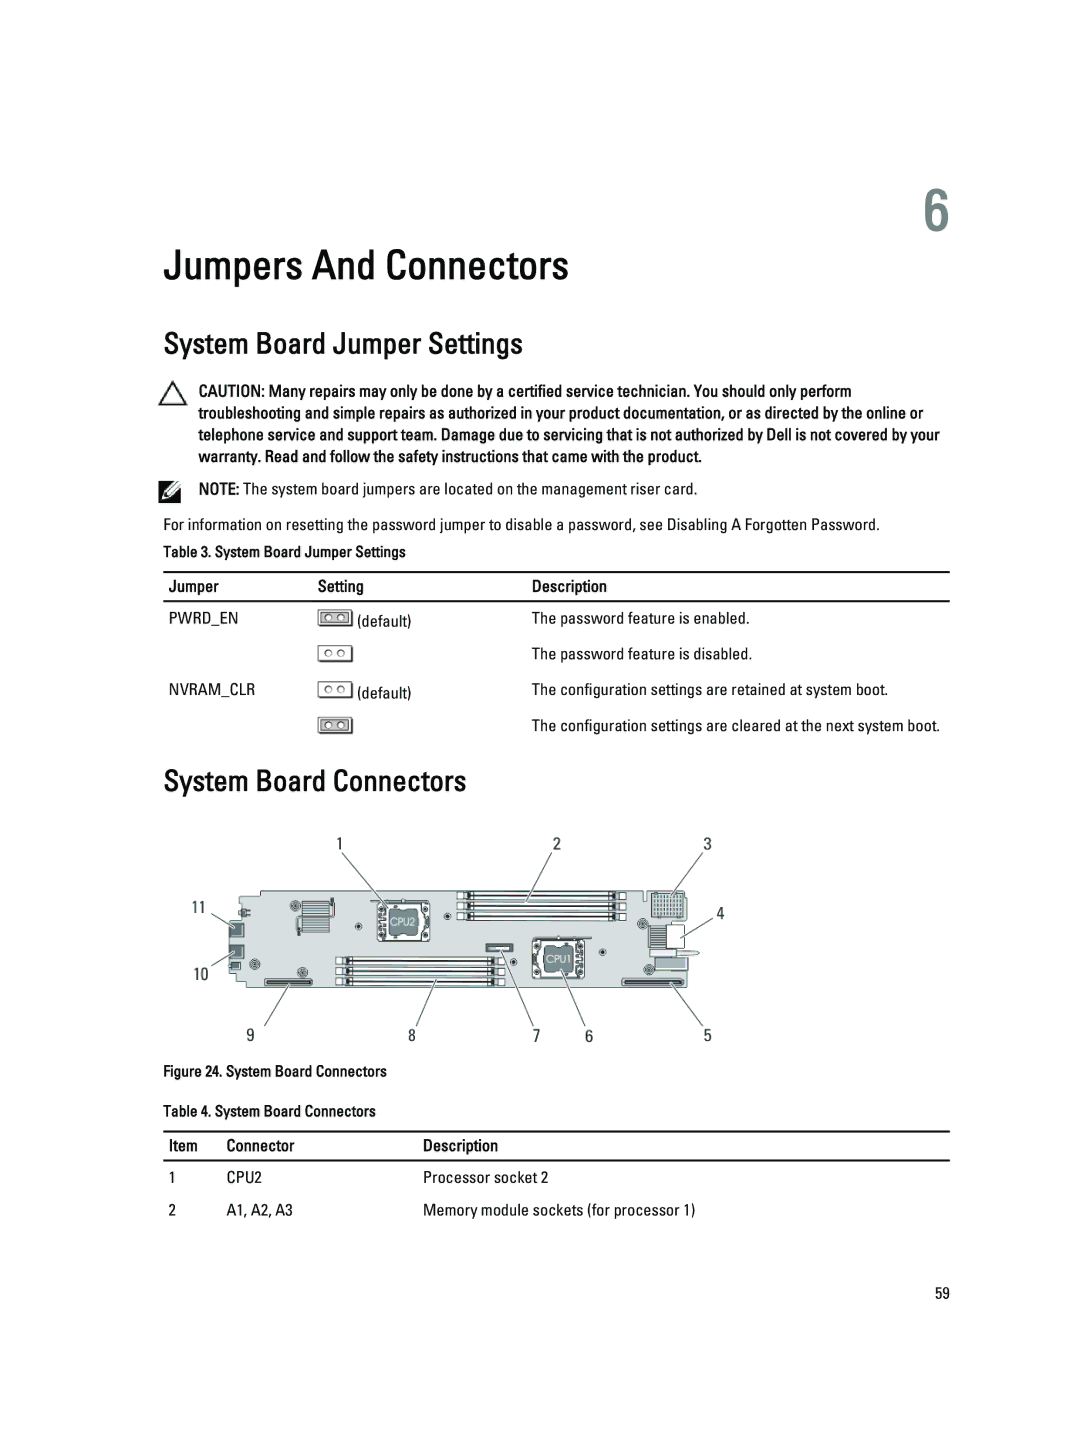 Dell QHB owner manual System Board Jumper Settings, System Board Connectors, Connector Description 